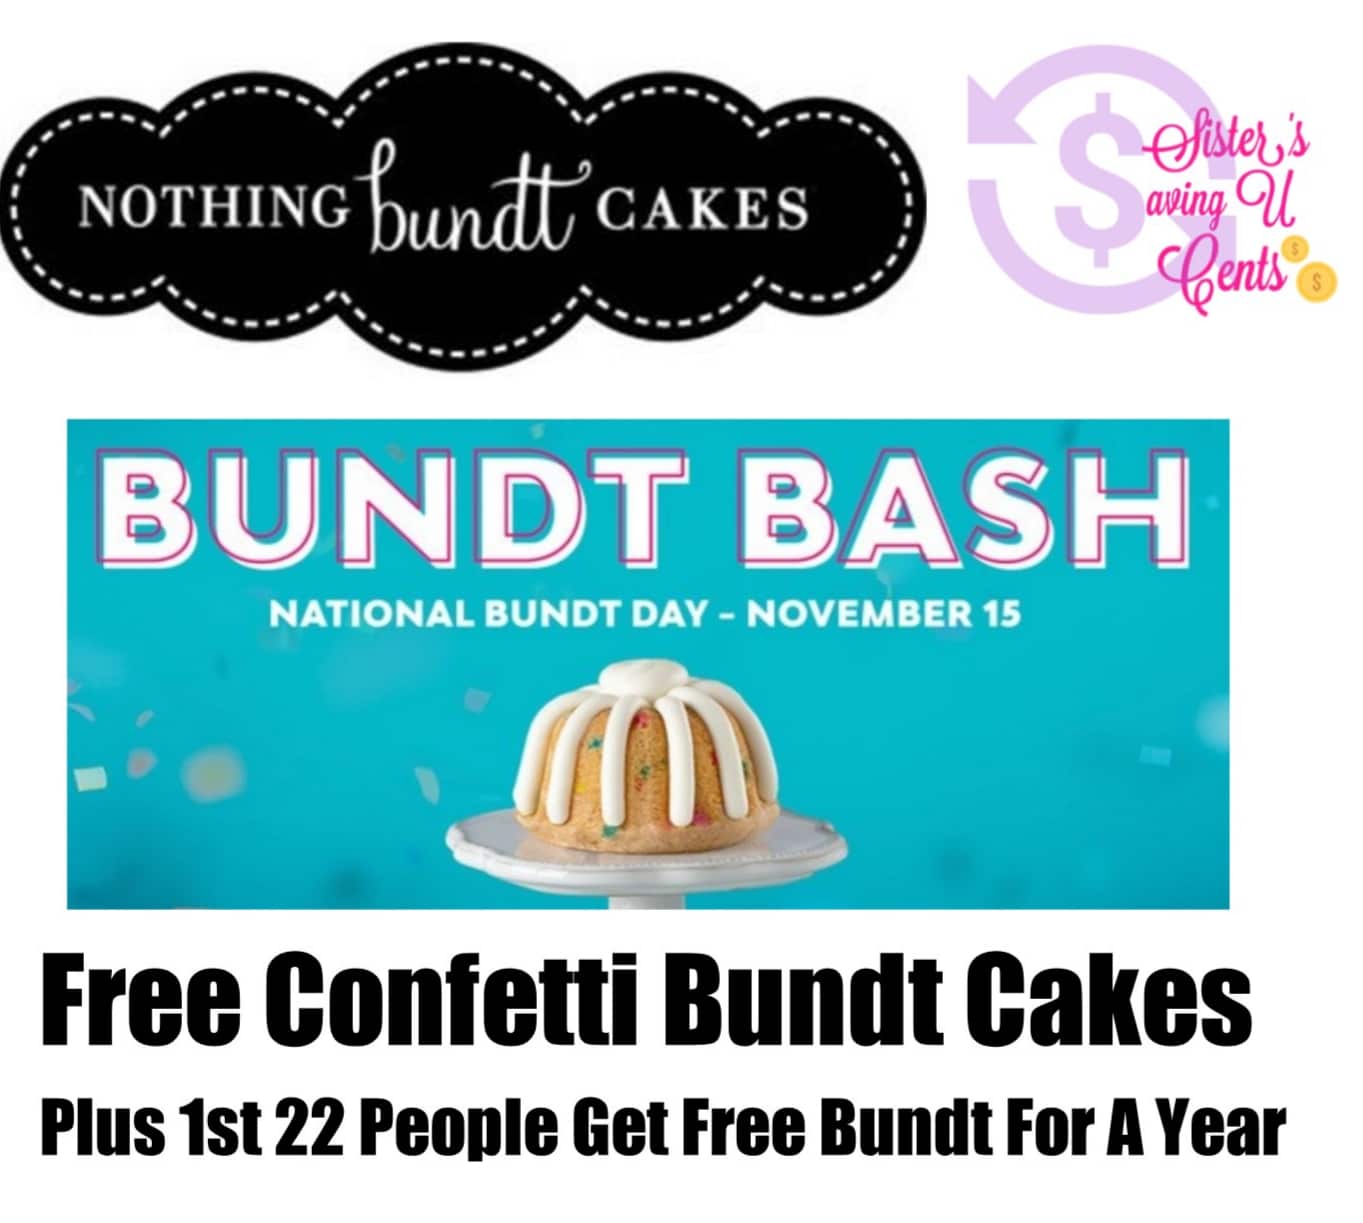 Nothing Bundt Cakes Coupon July 2017